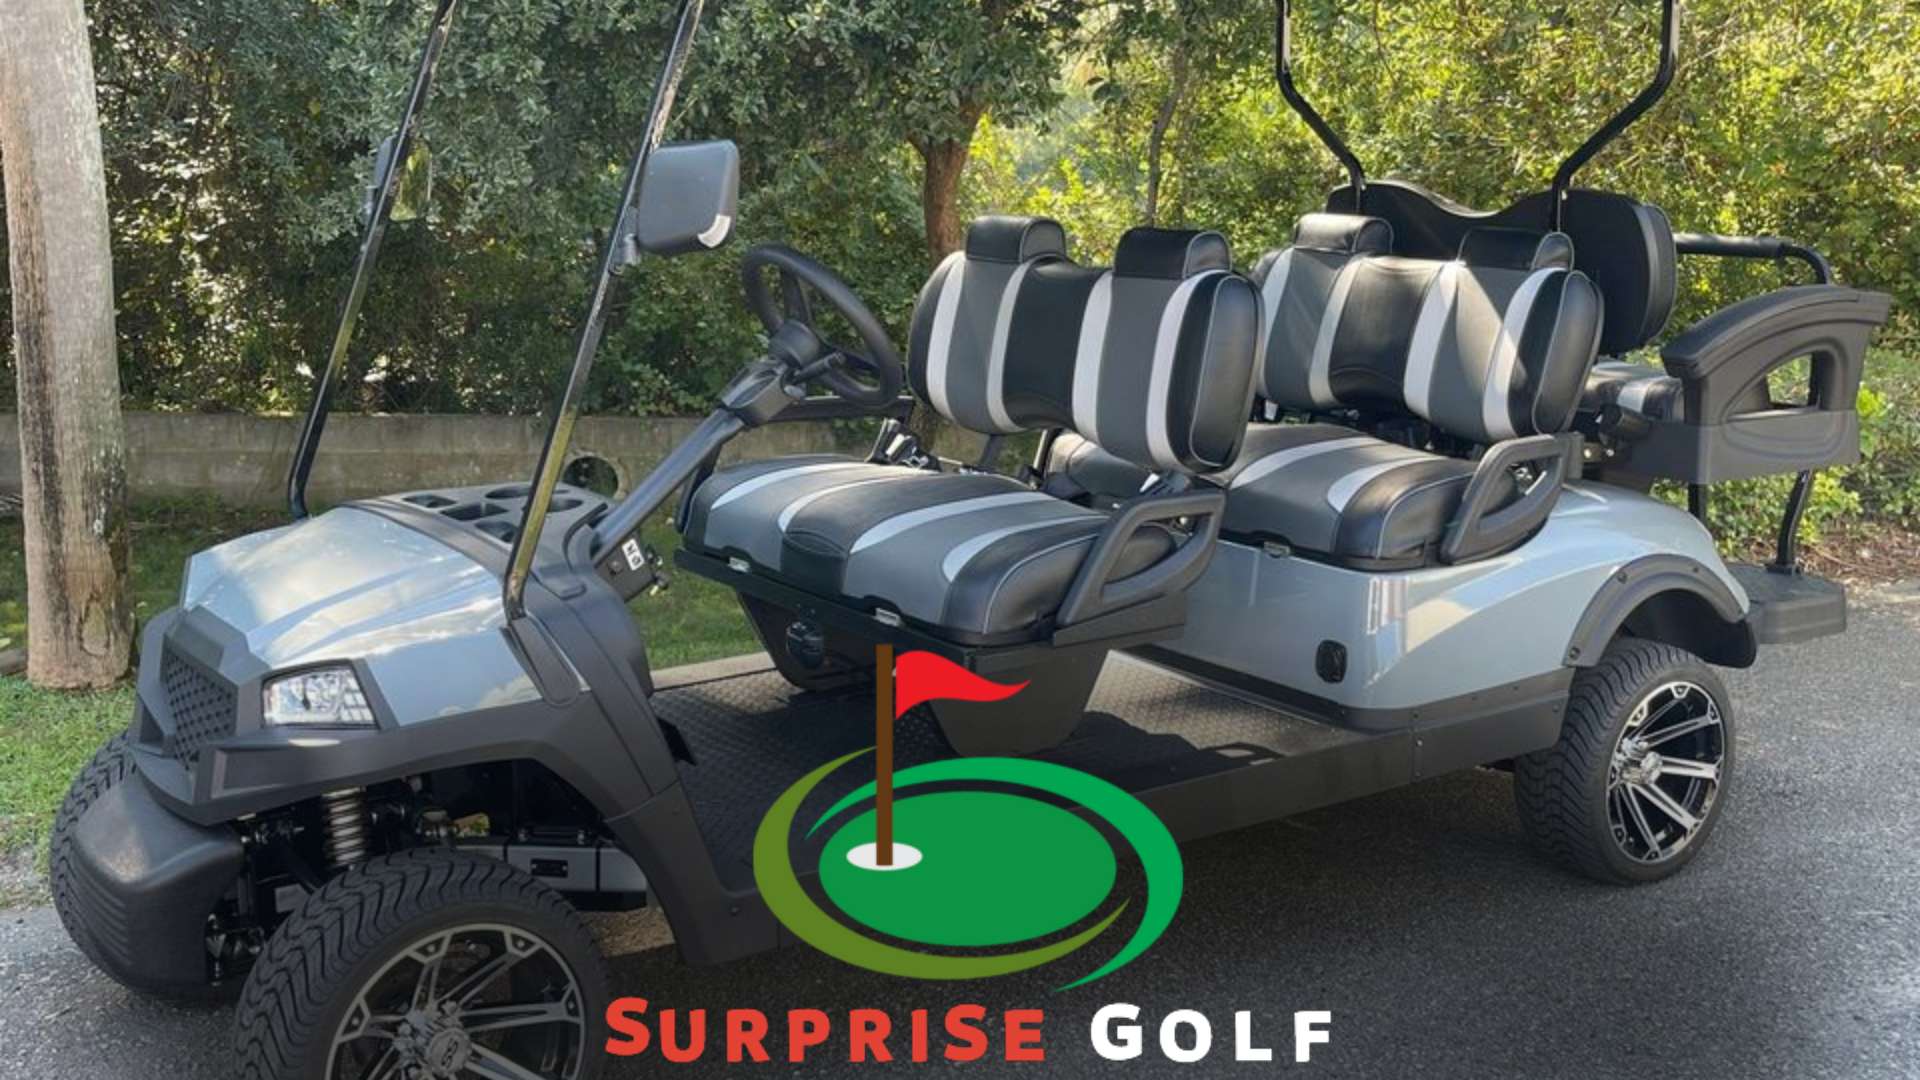 Who Makes Kodiak Golf Carts